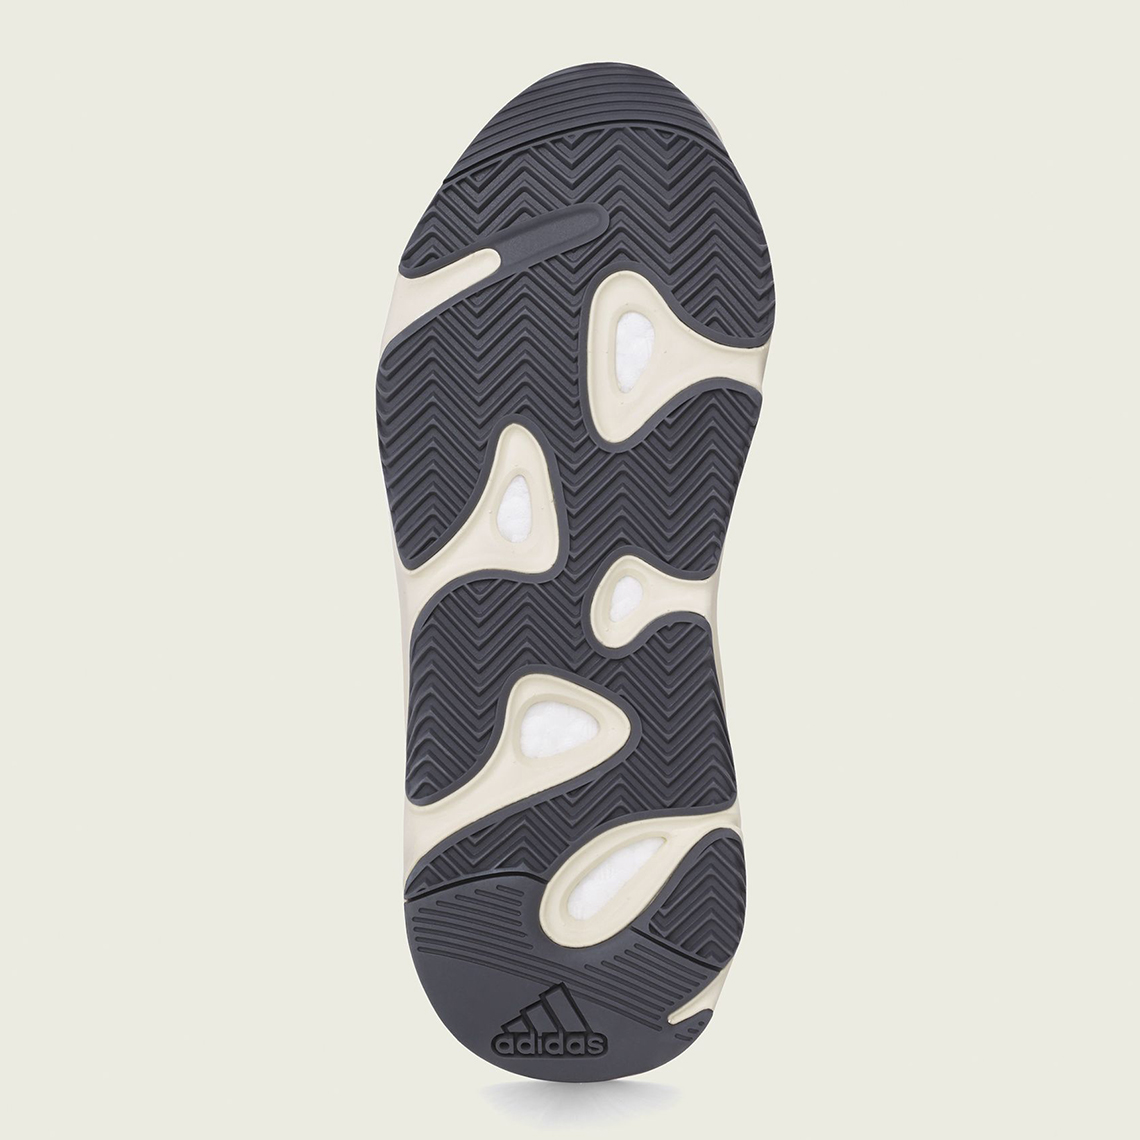 Adidas Yeezy Boost 700 Analog Eg7596 Release Date 3